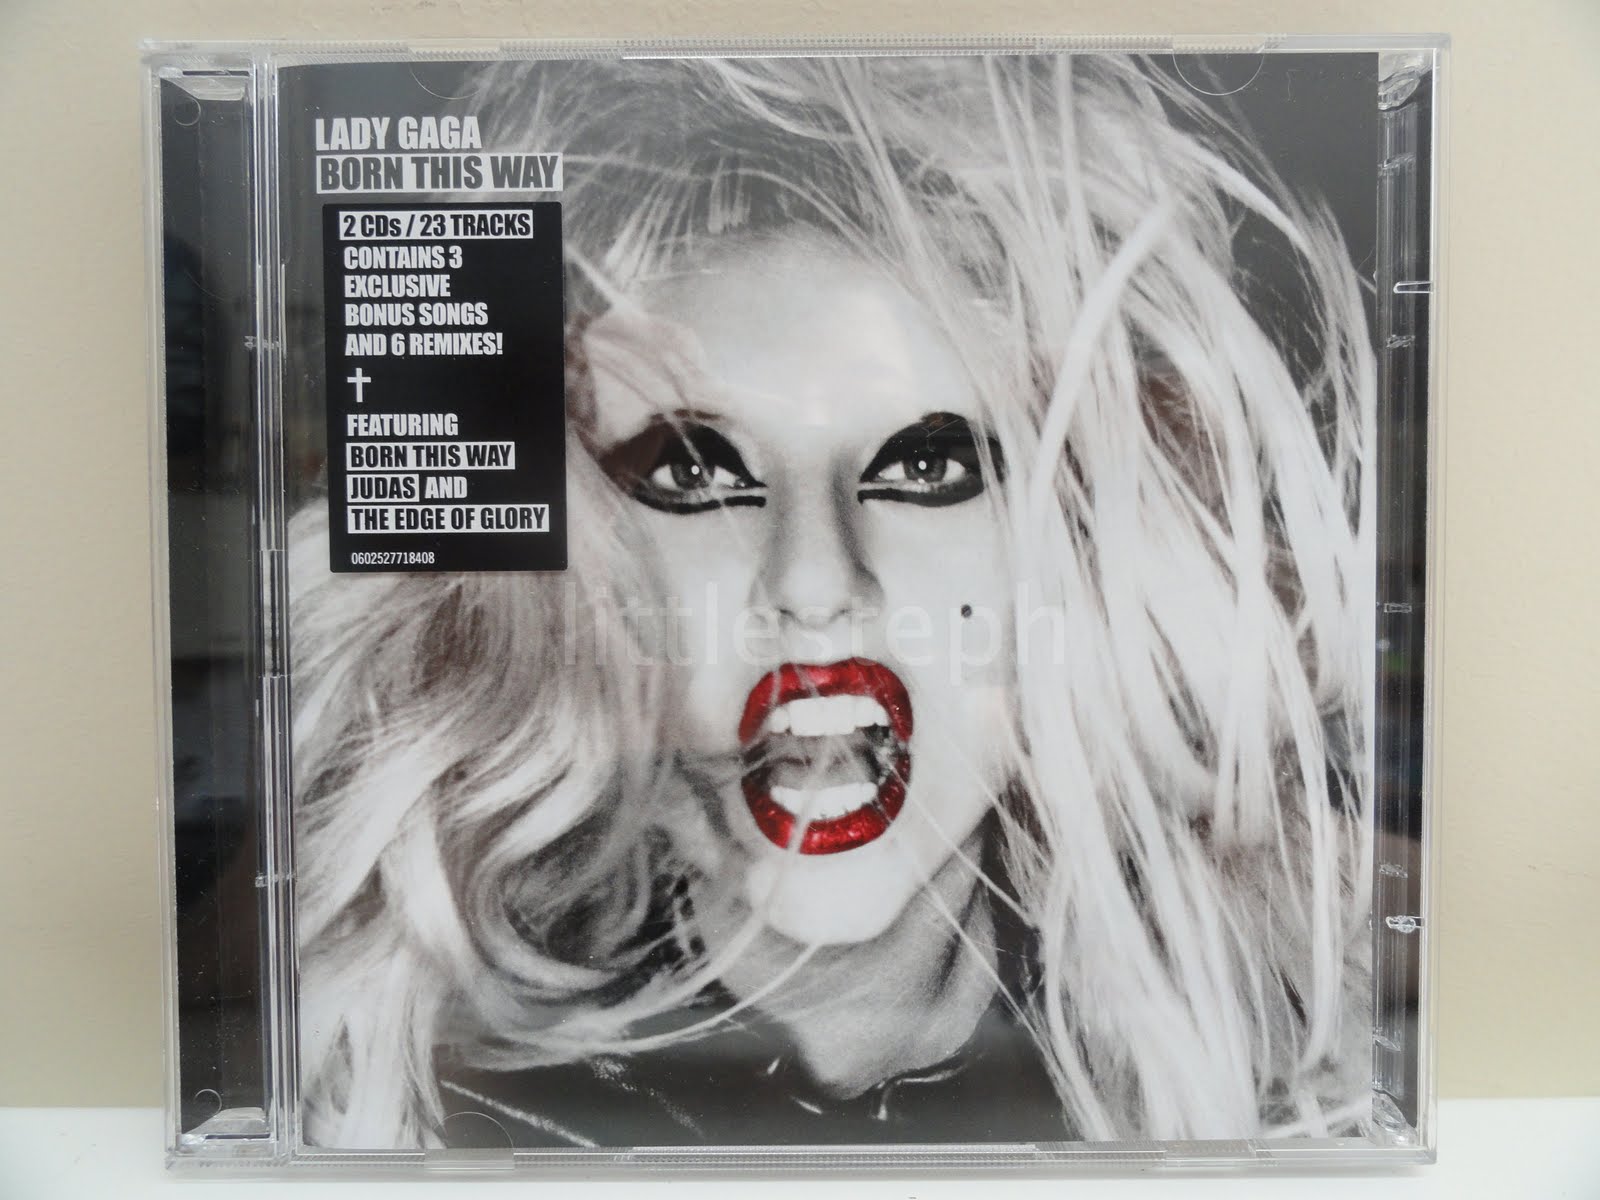 Lady gaga remember us this way перевод. Леди Гага альбомы. Леди Гага Борн ЗИС Вей. Леди Гага обложки альбомов. Леди Гага альбом born this.